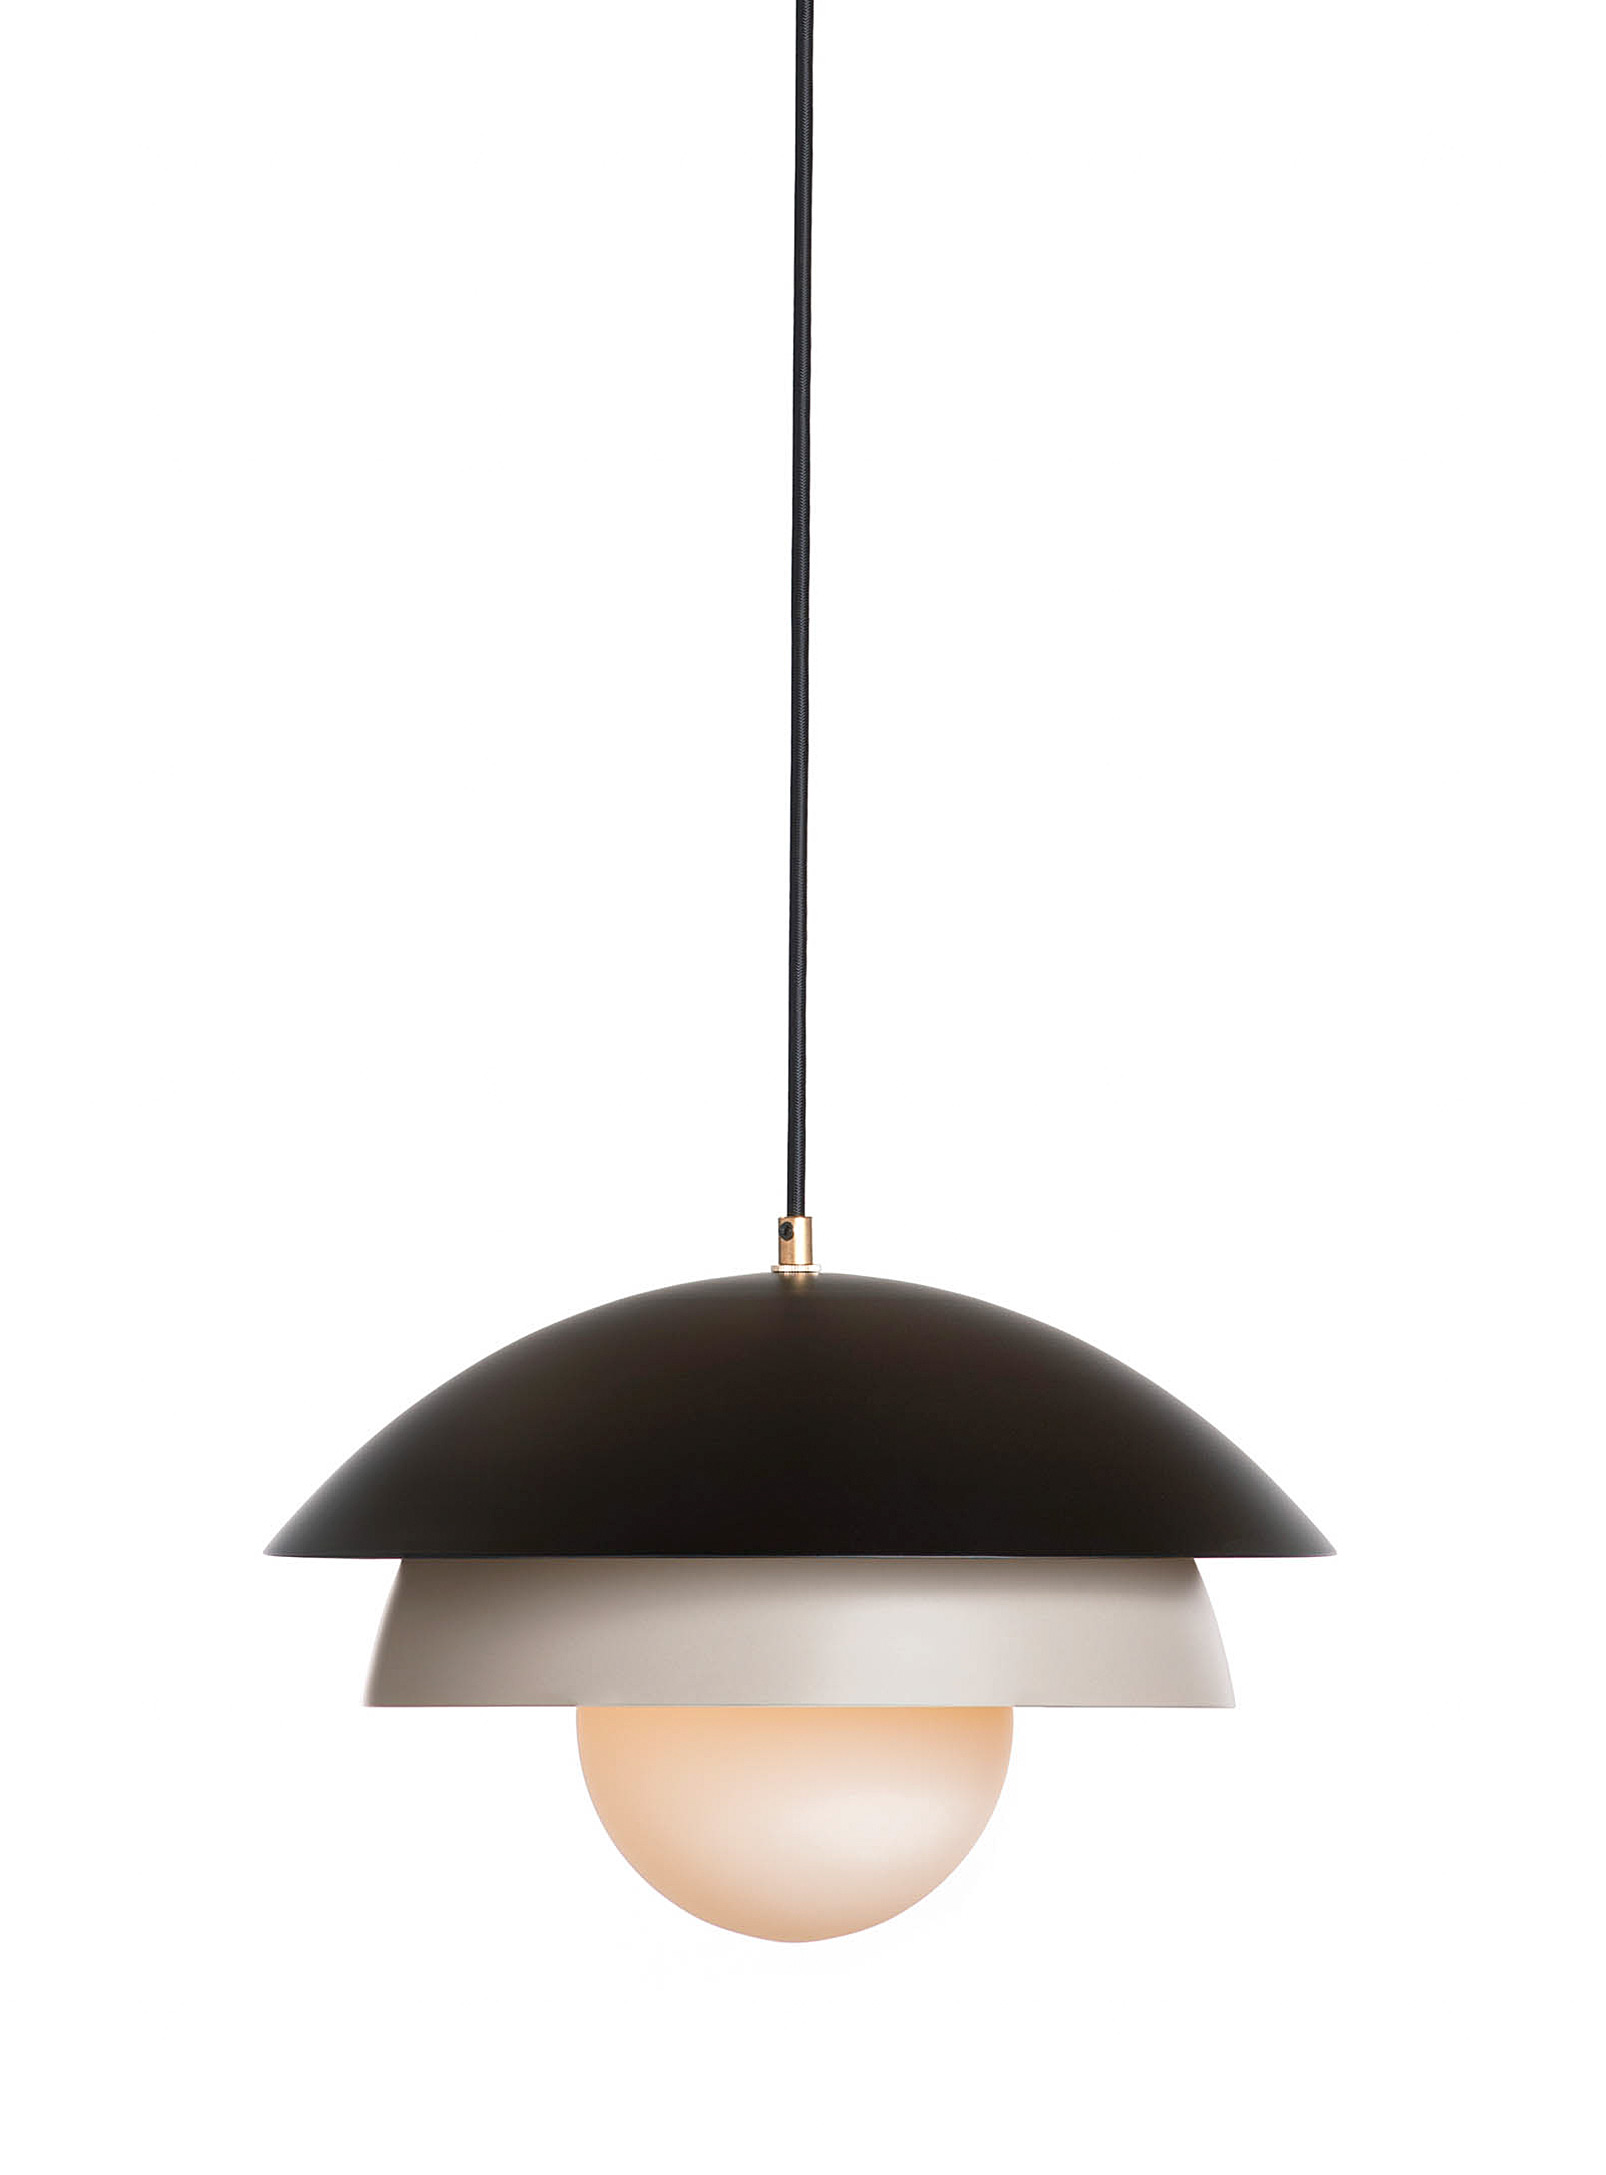 Luminaire Authentik Large Finlandaise Hanging Lamp In Patterned Black